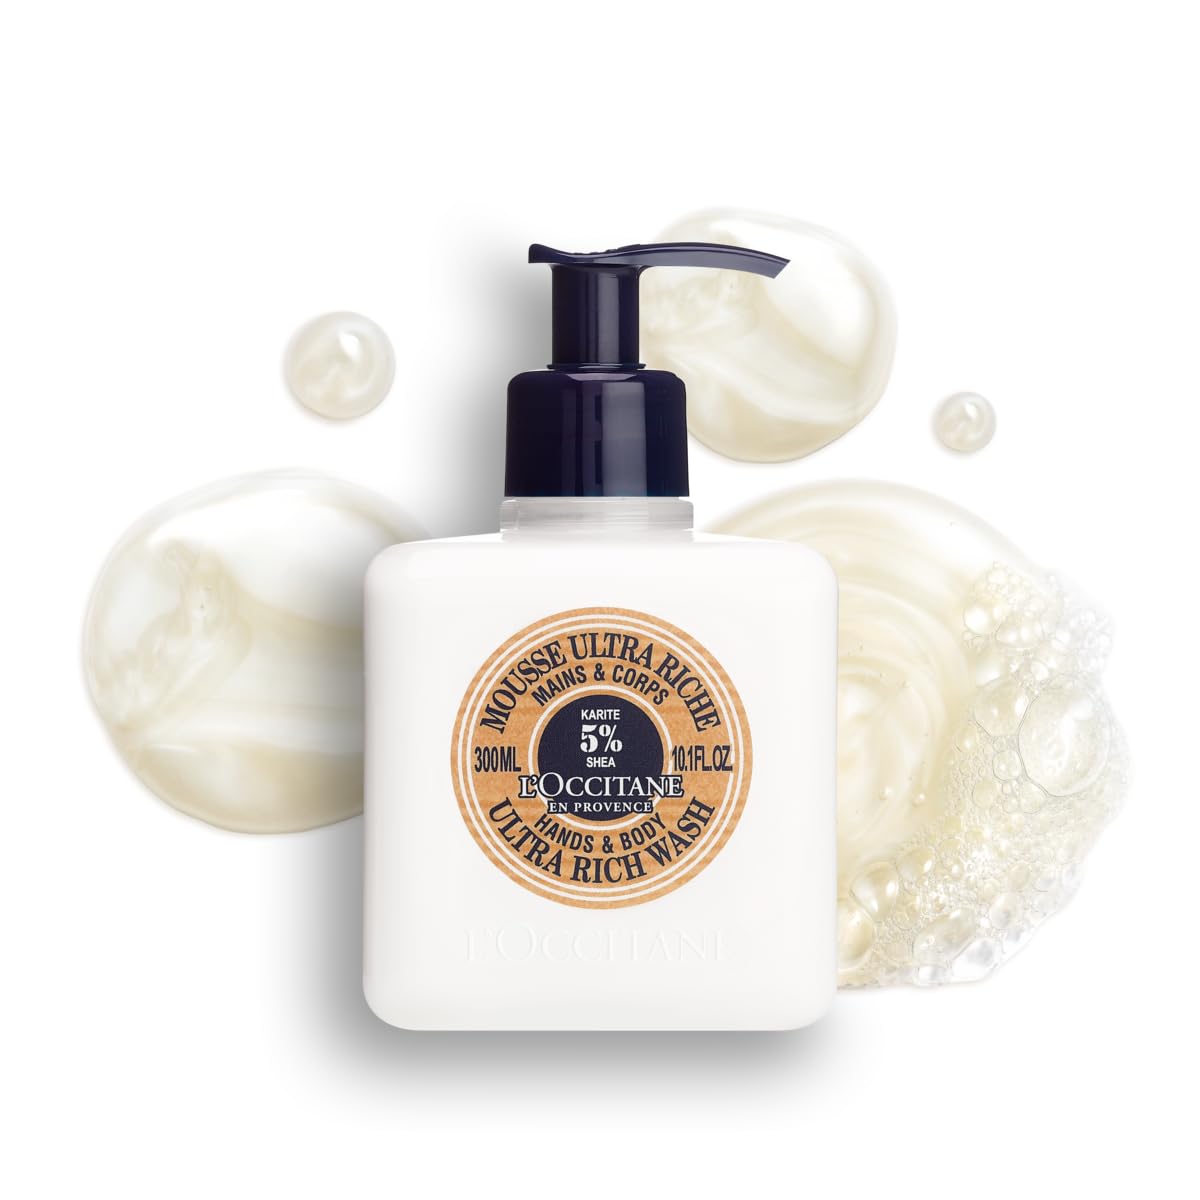 Shea Hands & Body Ultra Rich Wash: Cleanse, Soften, Gentl e Foaming Cream, Classic Shea Scent, Prevent Dryness